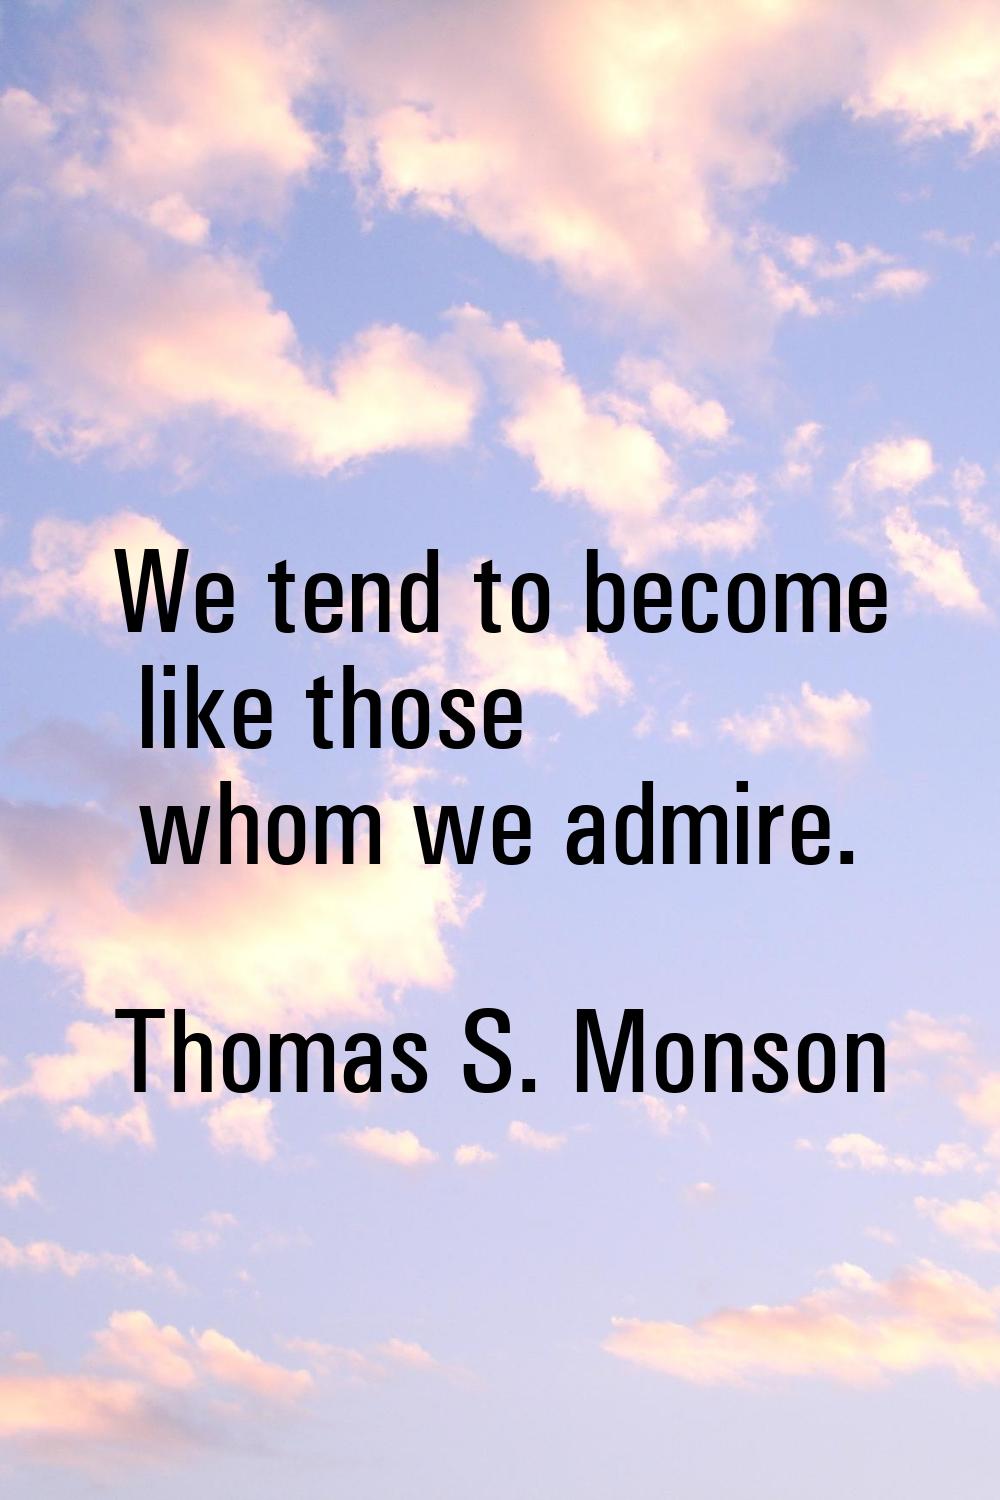 We tend to become like those whom we admire.